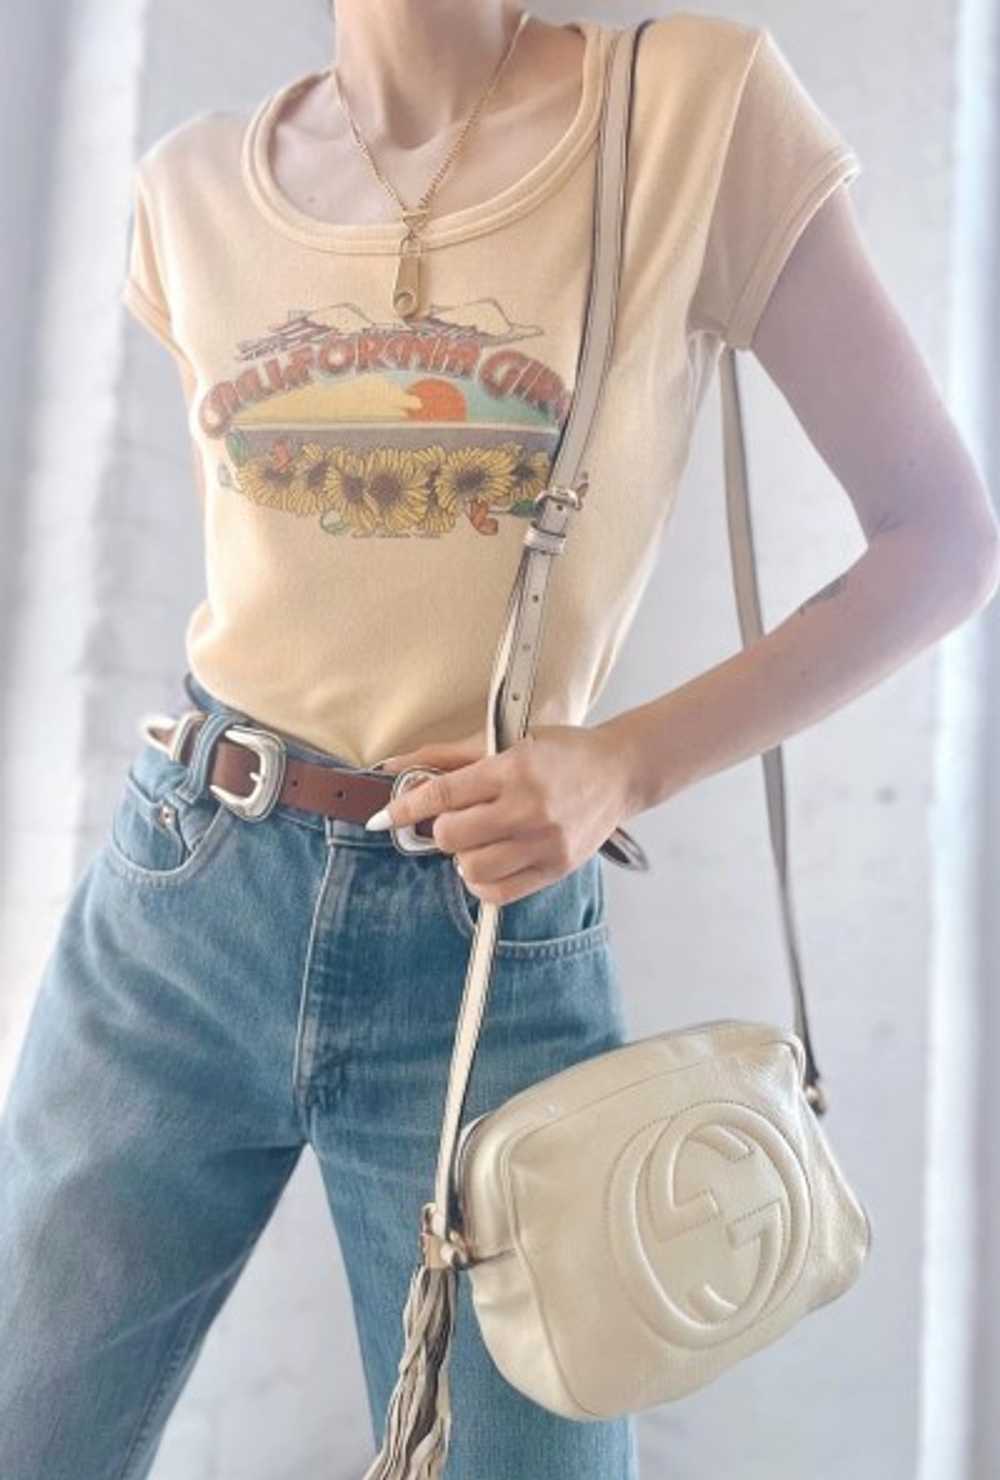 authentic Gucci Soho bag - image 2